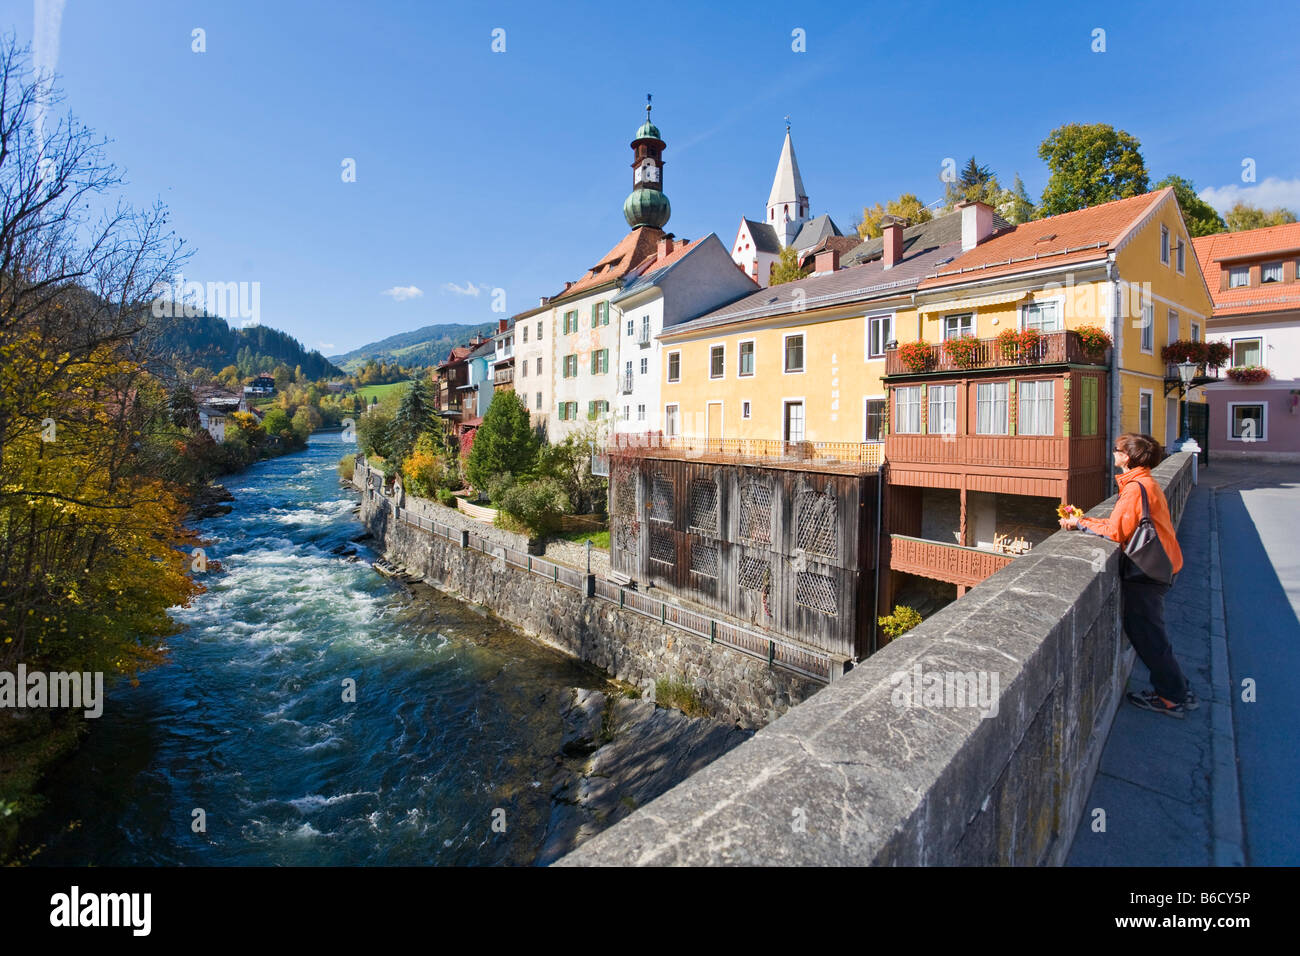 Houses along river, Mur, Murau, Styria, Austria Stock Photo